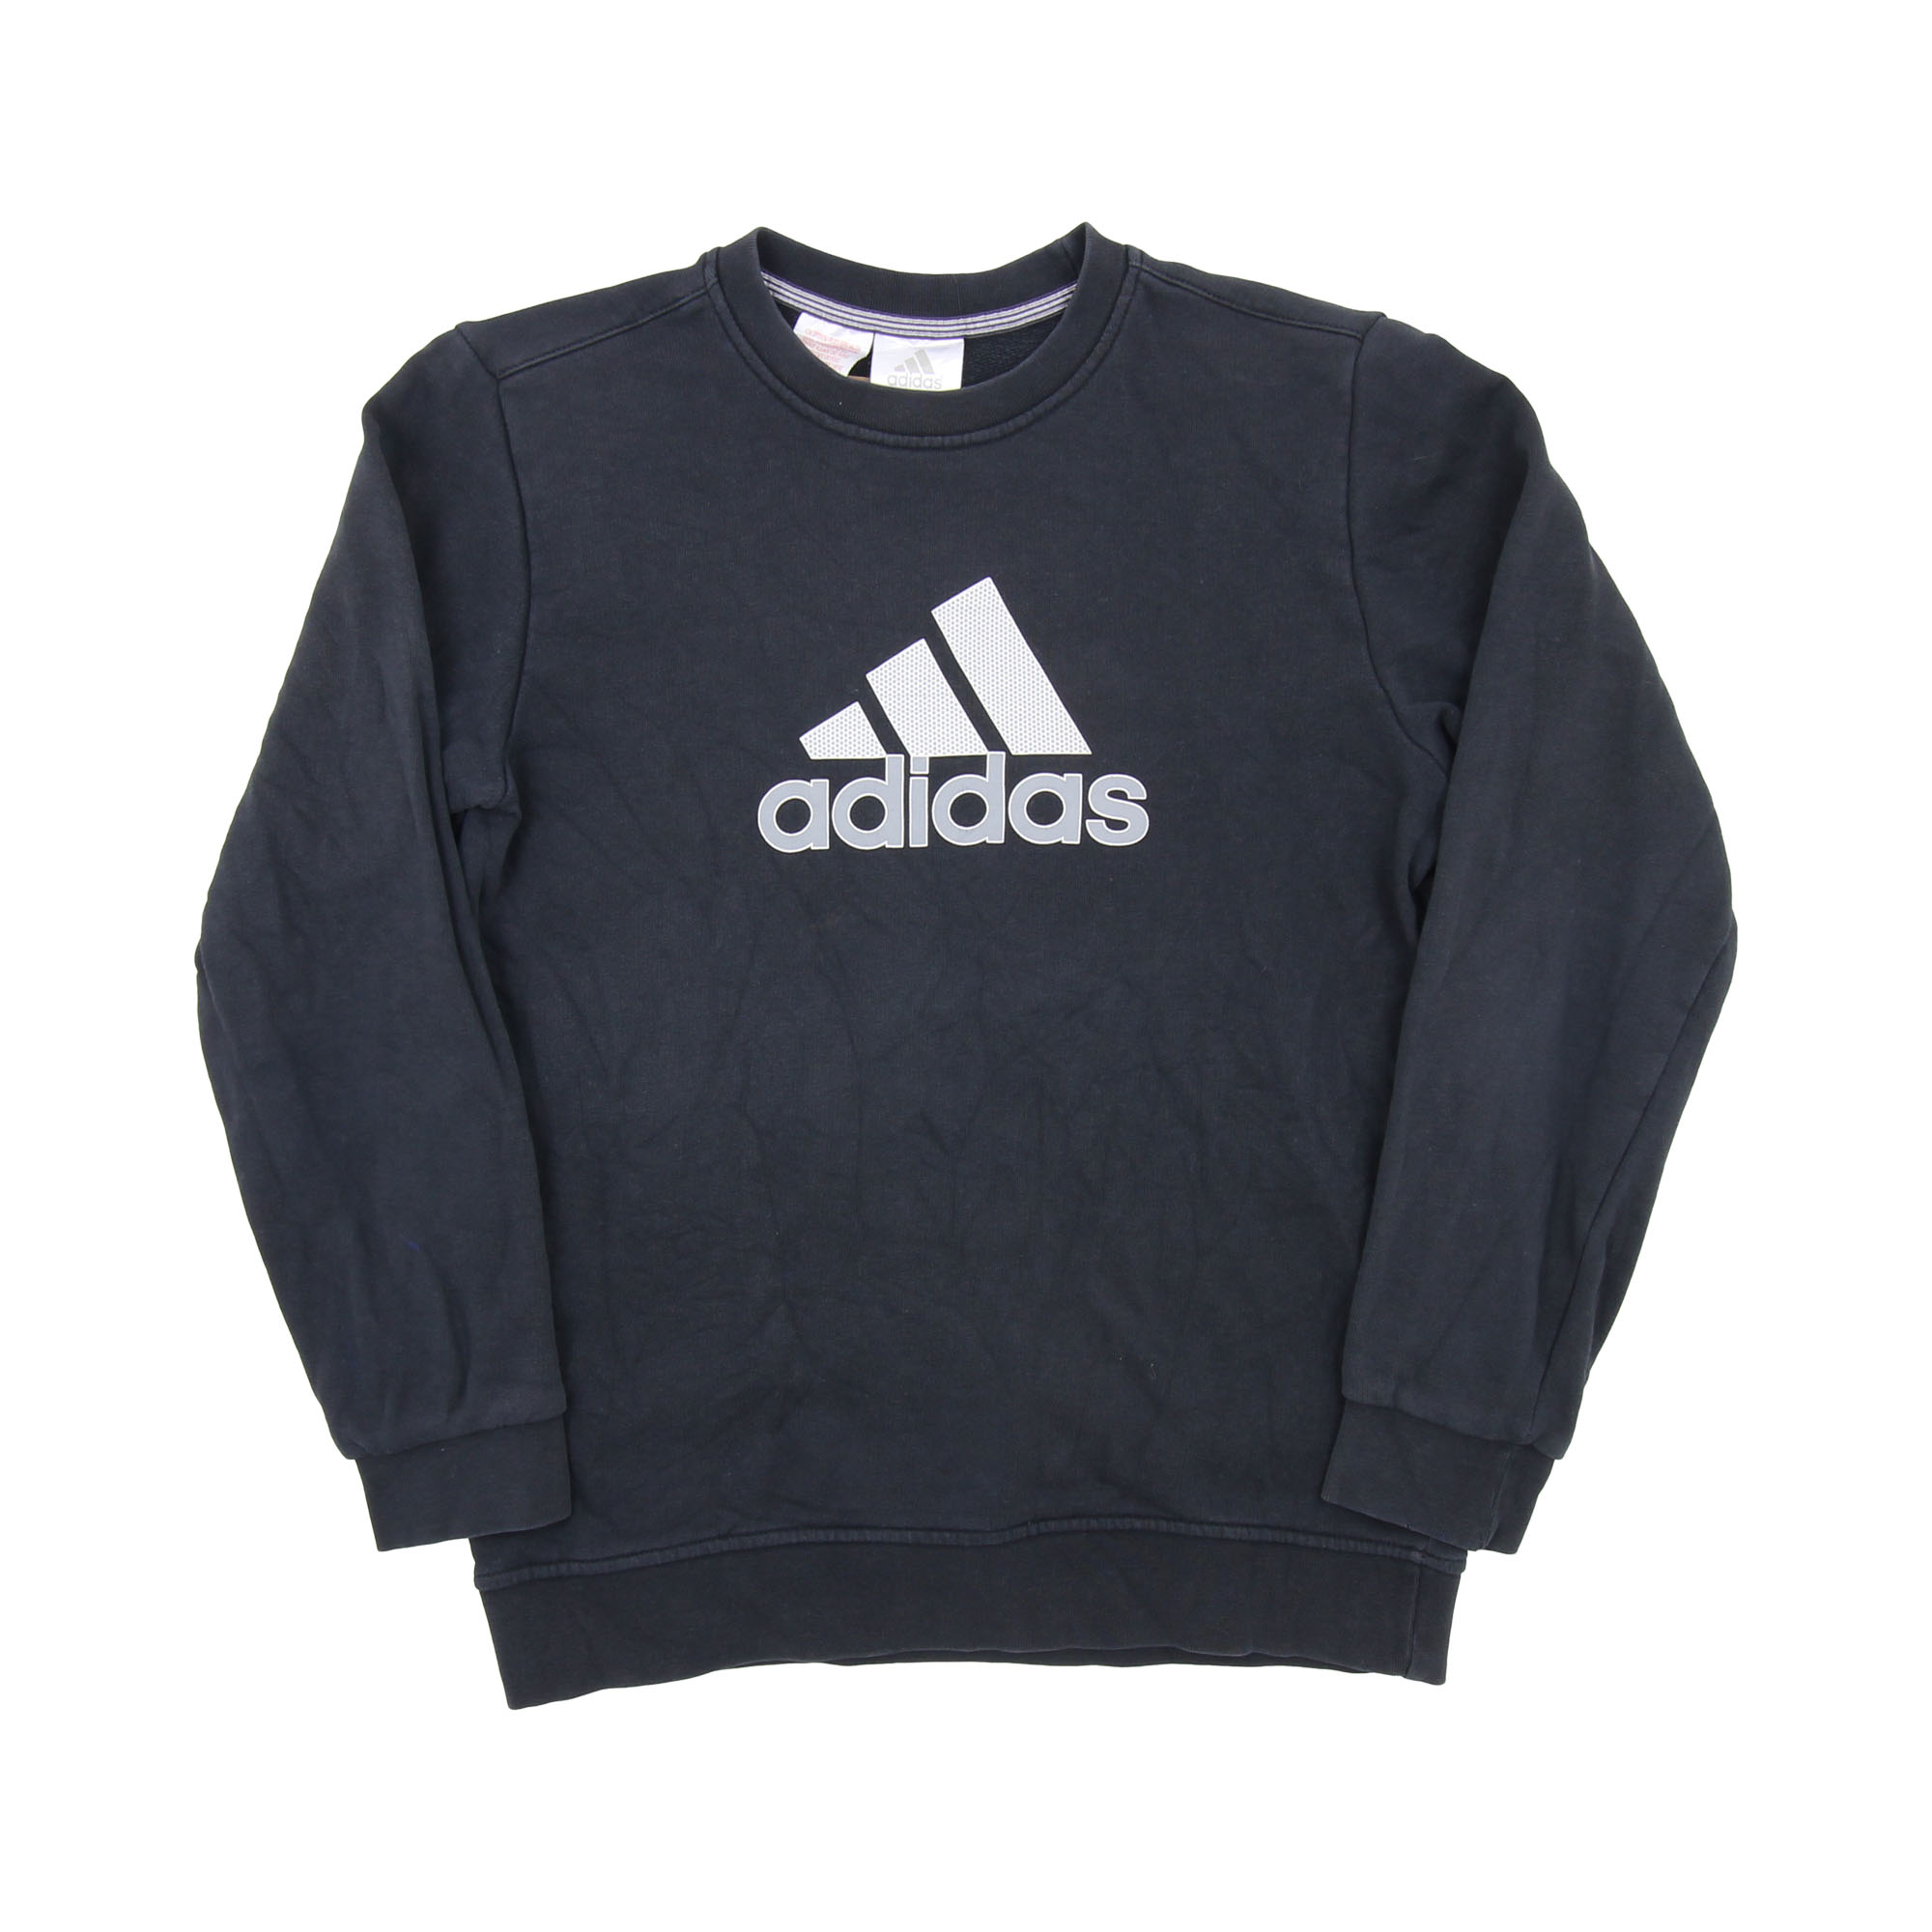 Adidas Printed Logo Sweatshirt -  S